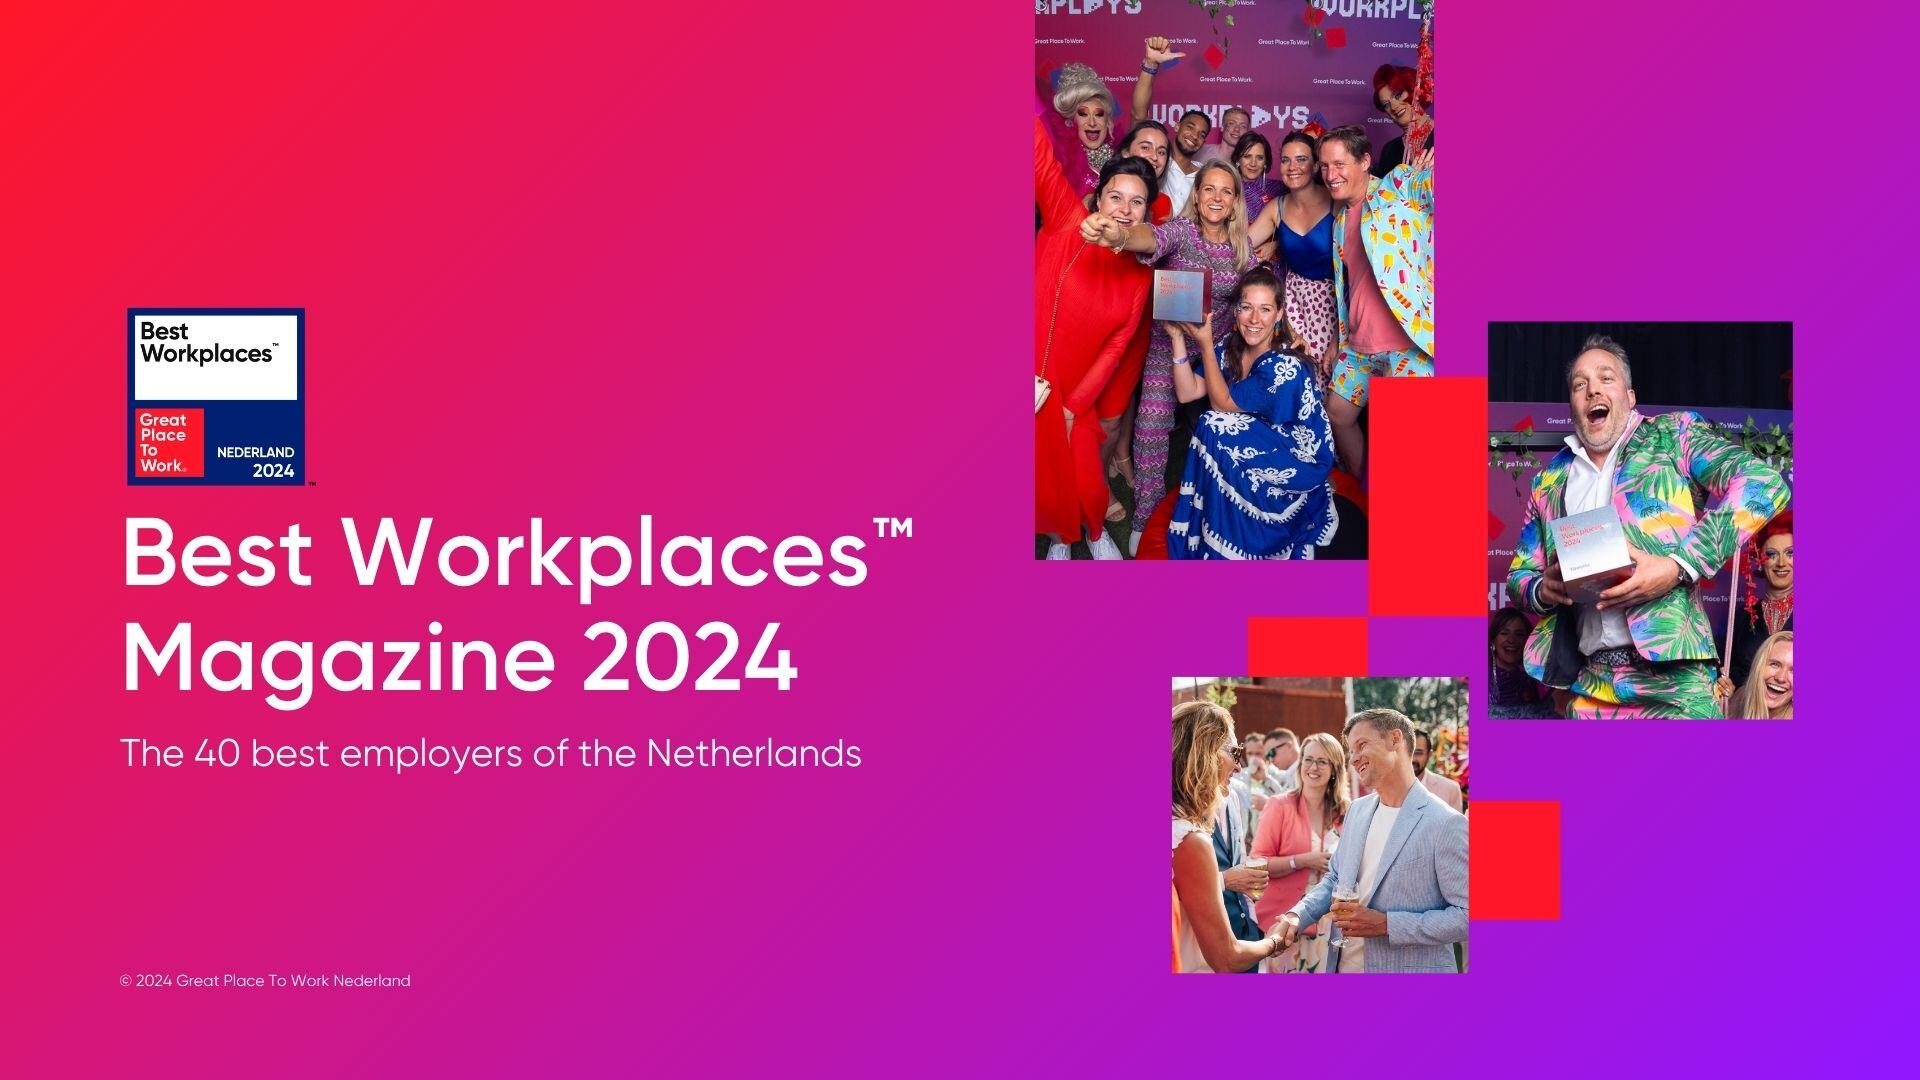 Best Workplaces Magazine 2024 [EN]